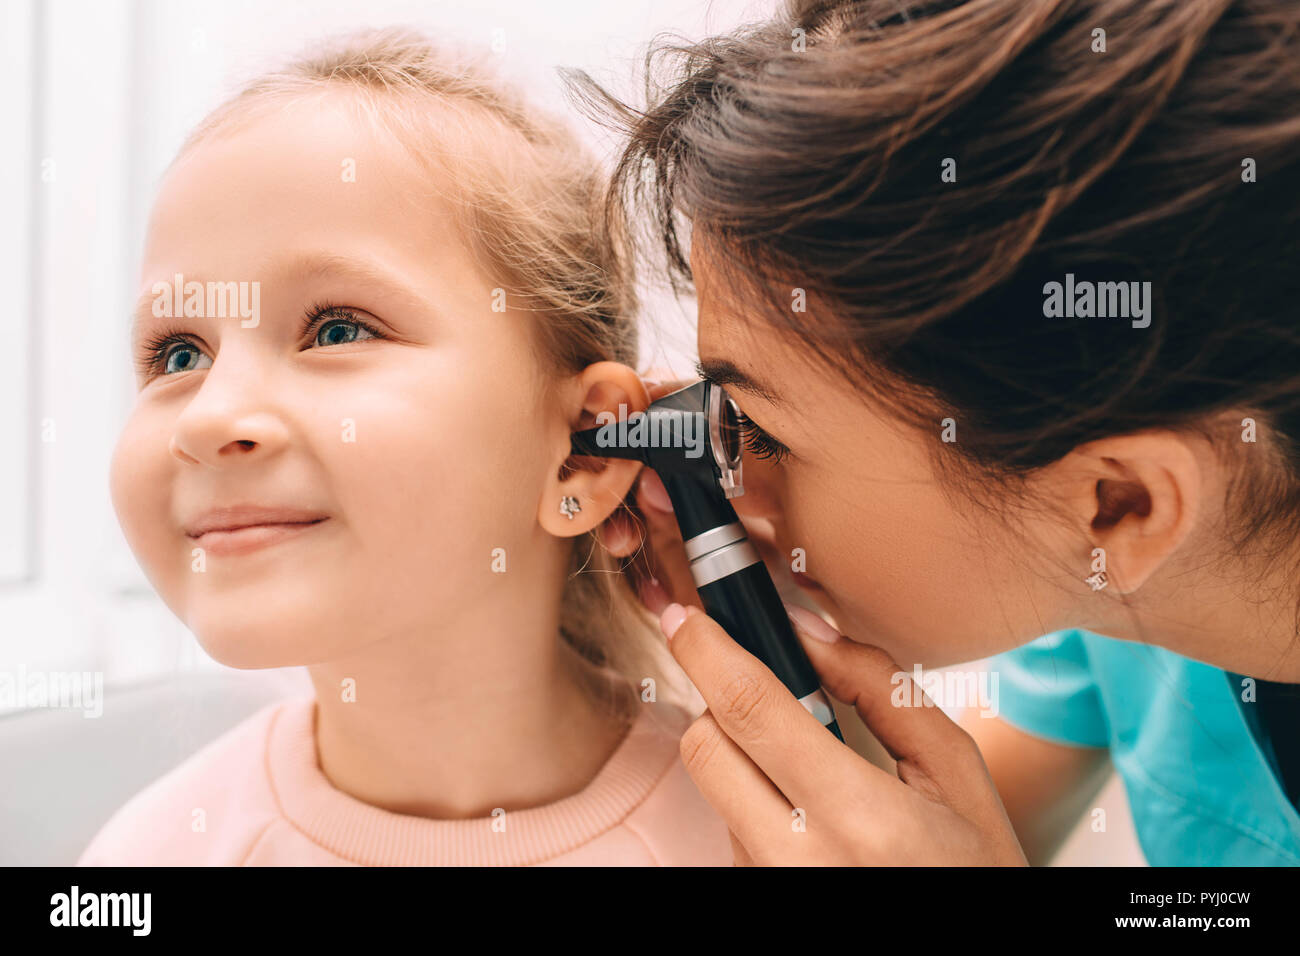 Smiling little girl having ear exam with otoscope Stock Photo